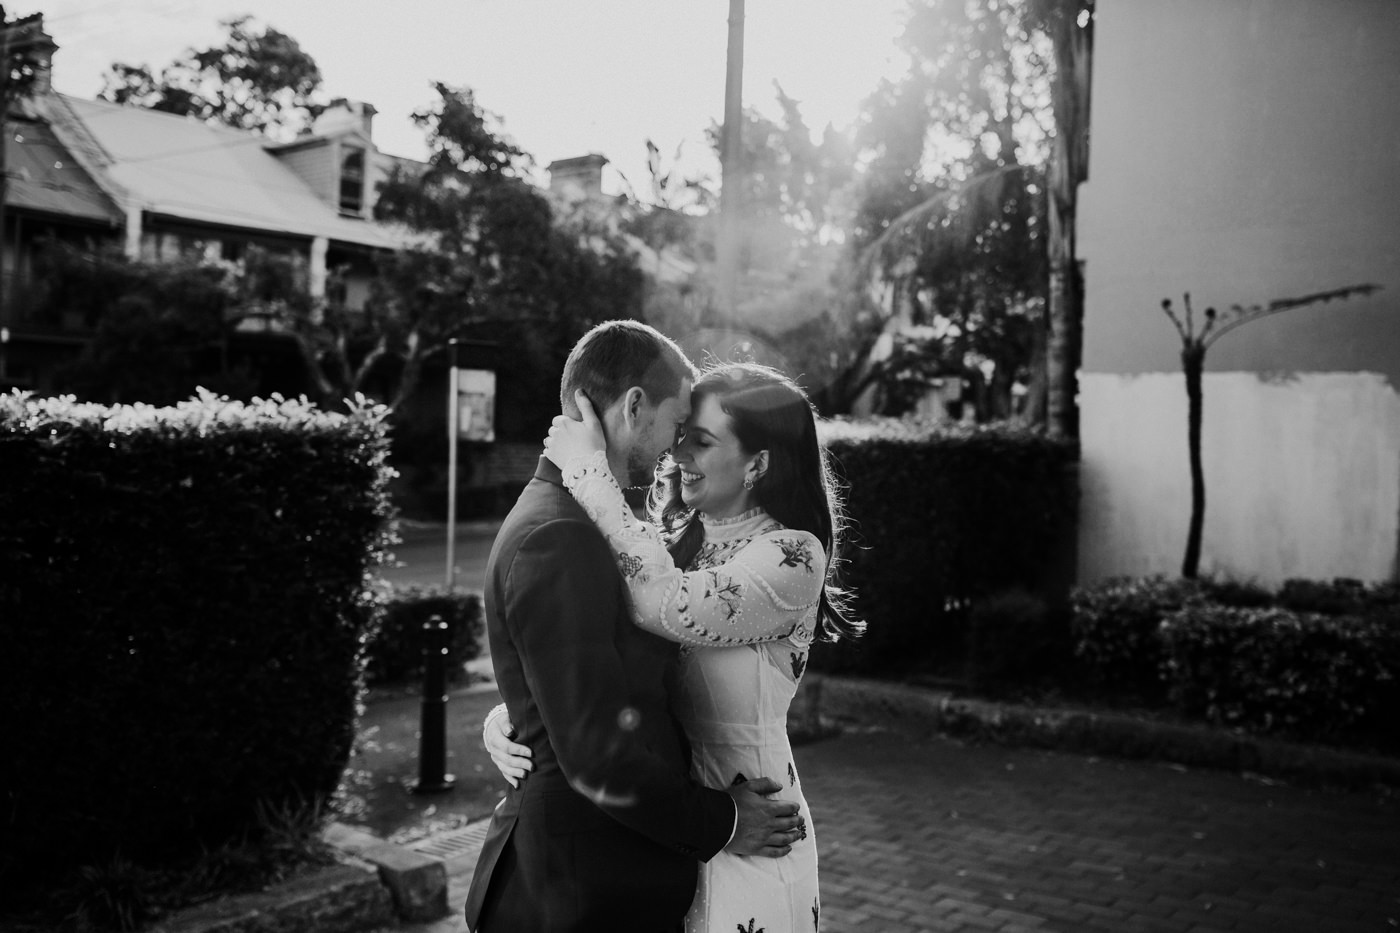 Amy & Mike - Porteno Surry Hills Wedding - Samantha Heather Photography-105.jpg